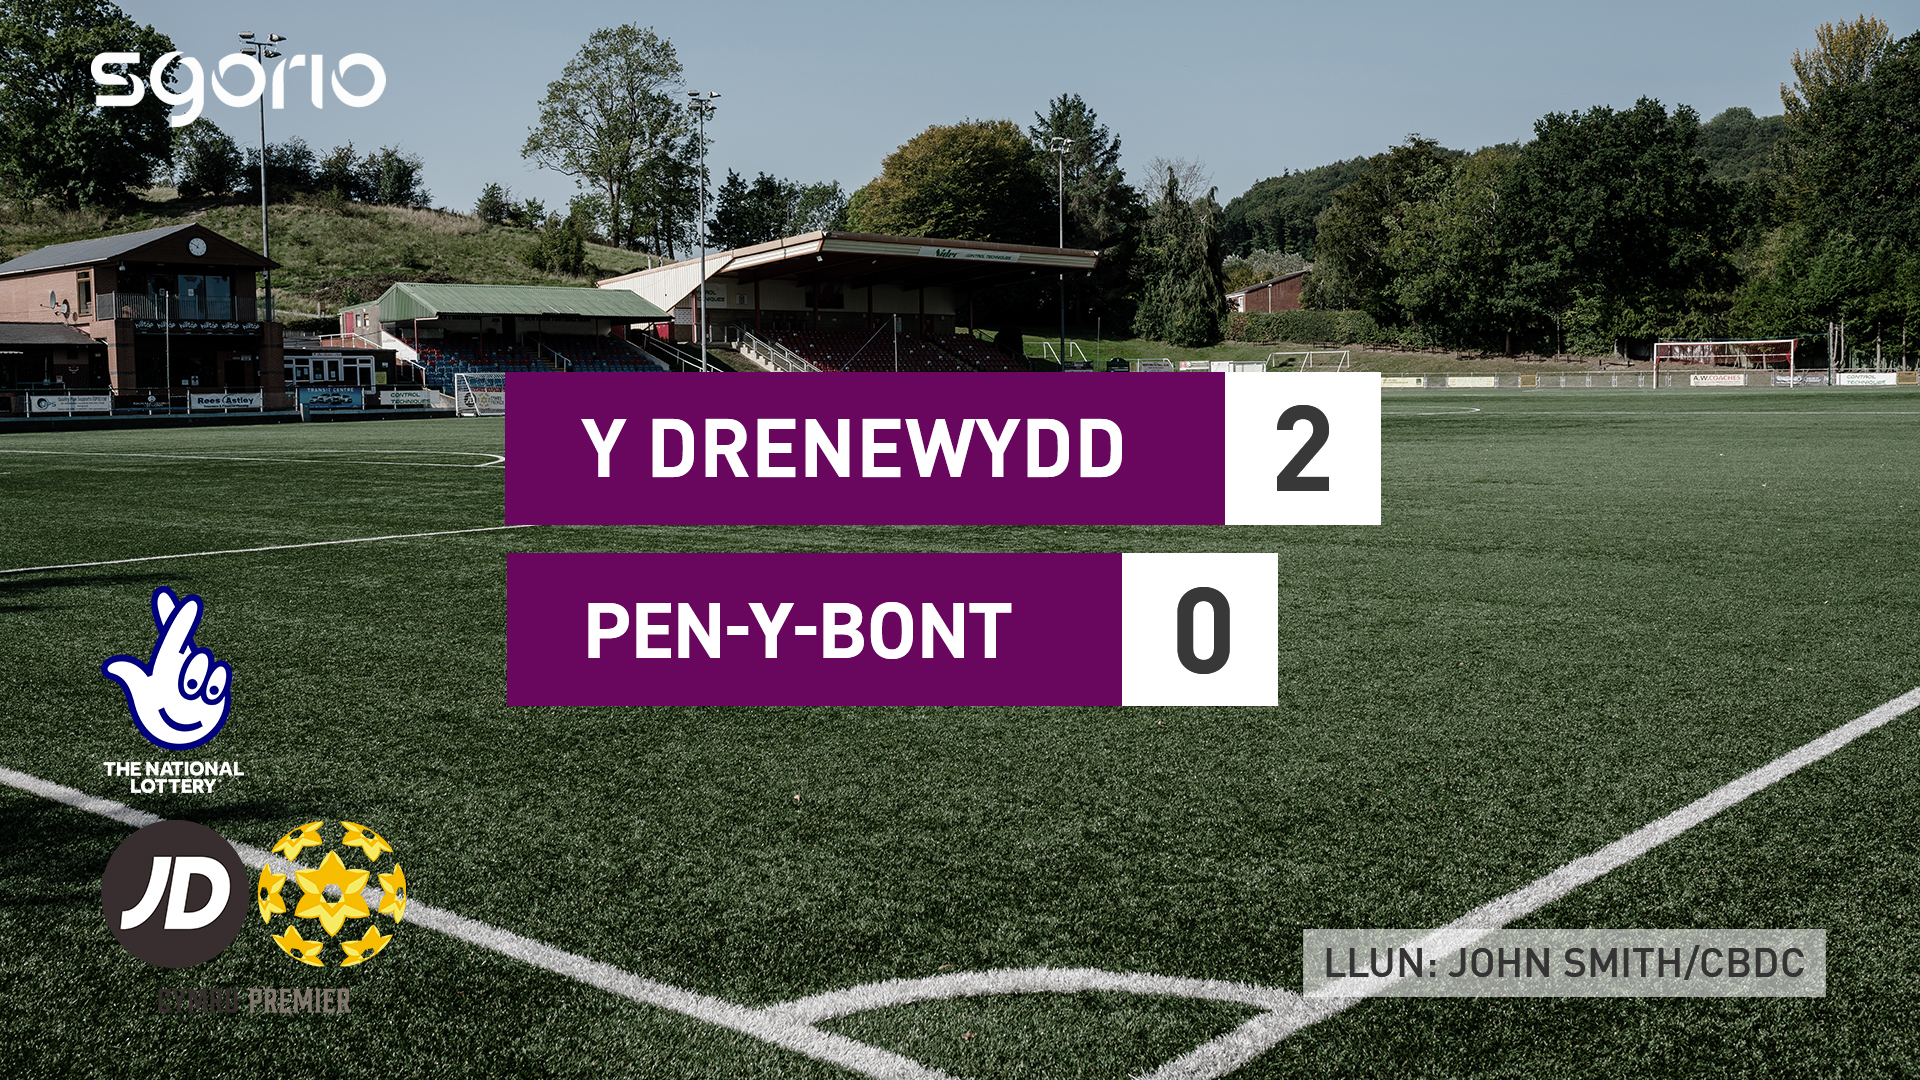 Y Drenewydd 2-0 Pen-y-bont